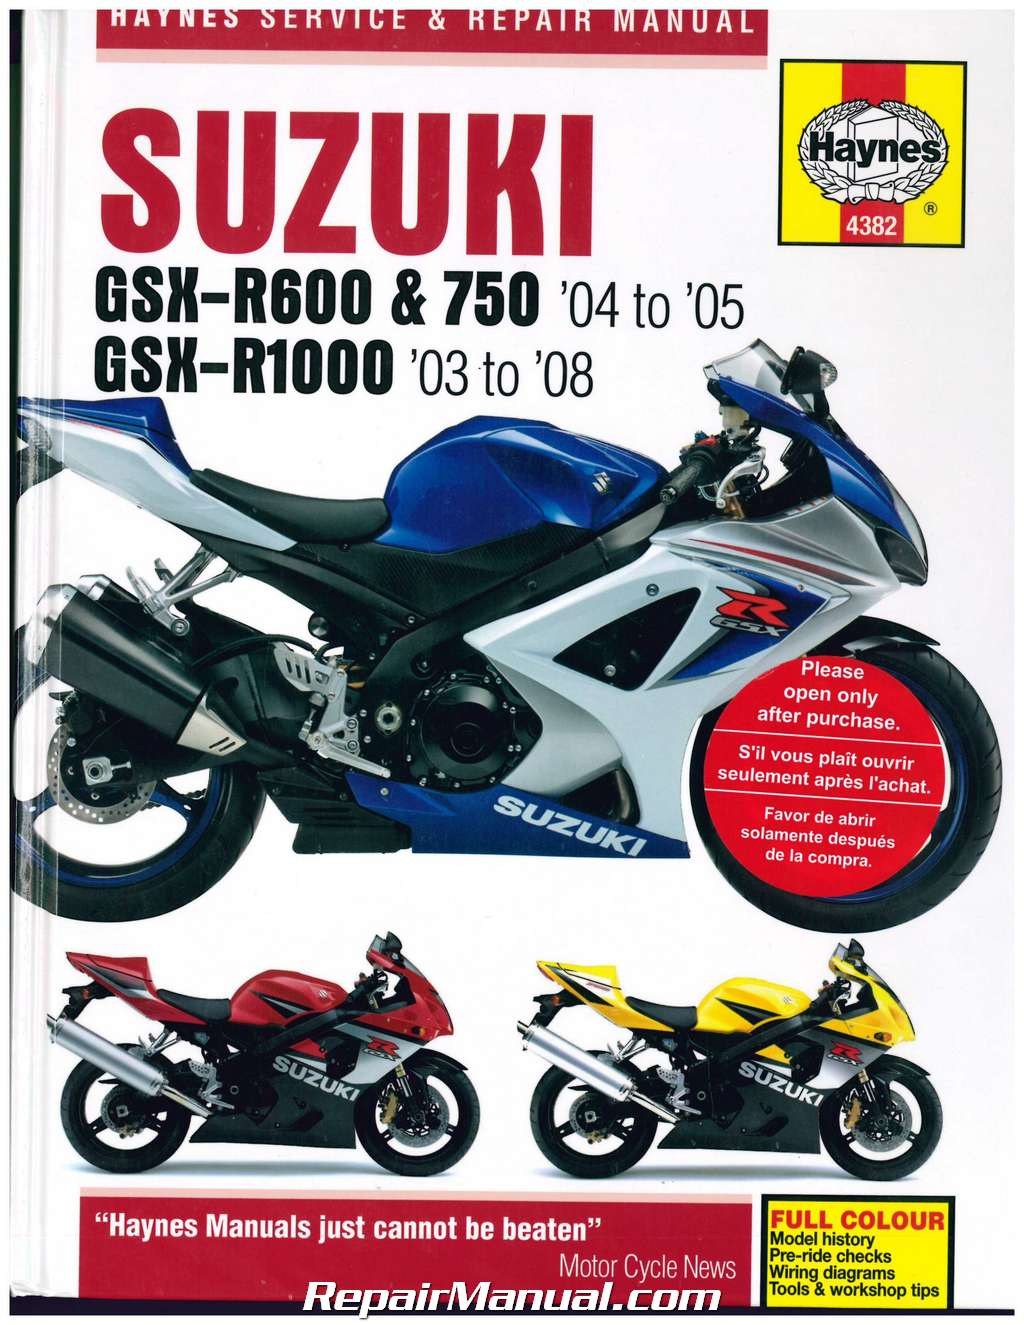 04 suzuki gsxr 750 manual - Suzuki GSX-R GSX-R - GSX-R - Haynes Motorcycle  Repair Manual